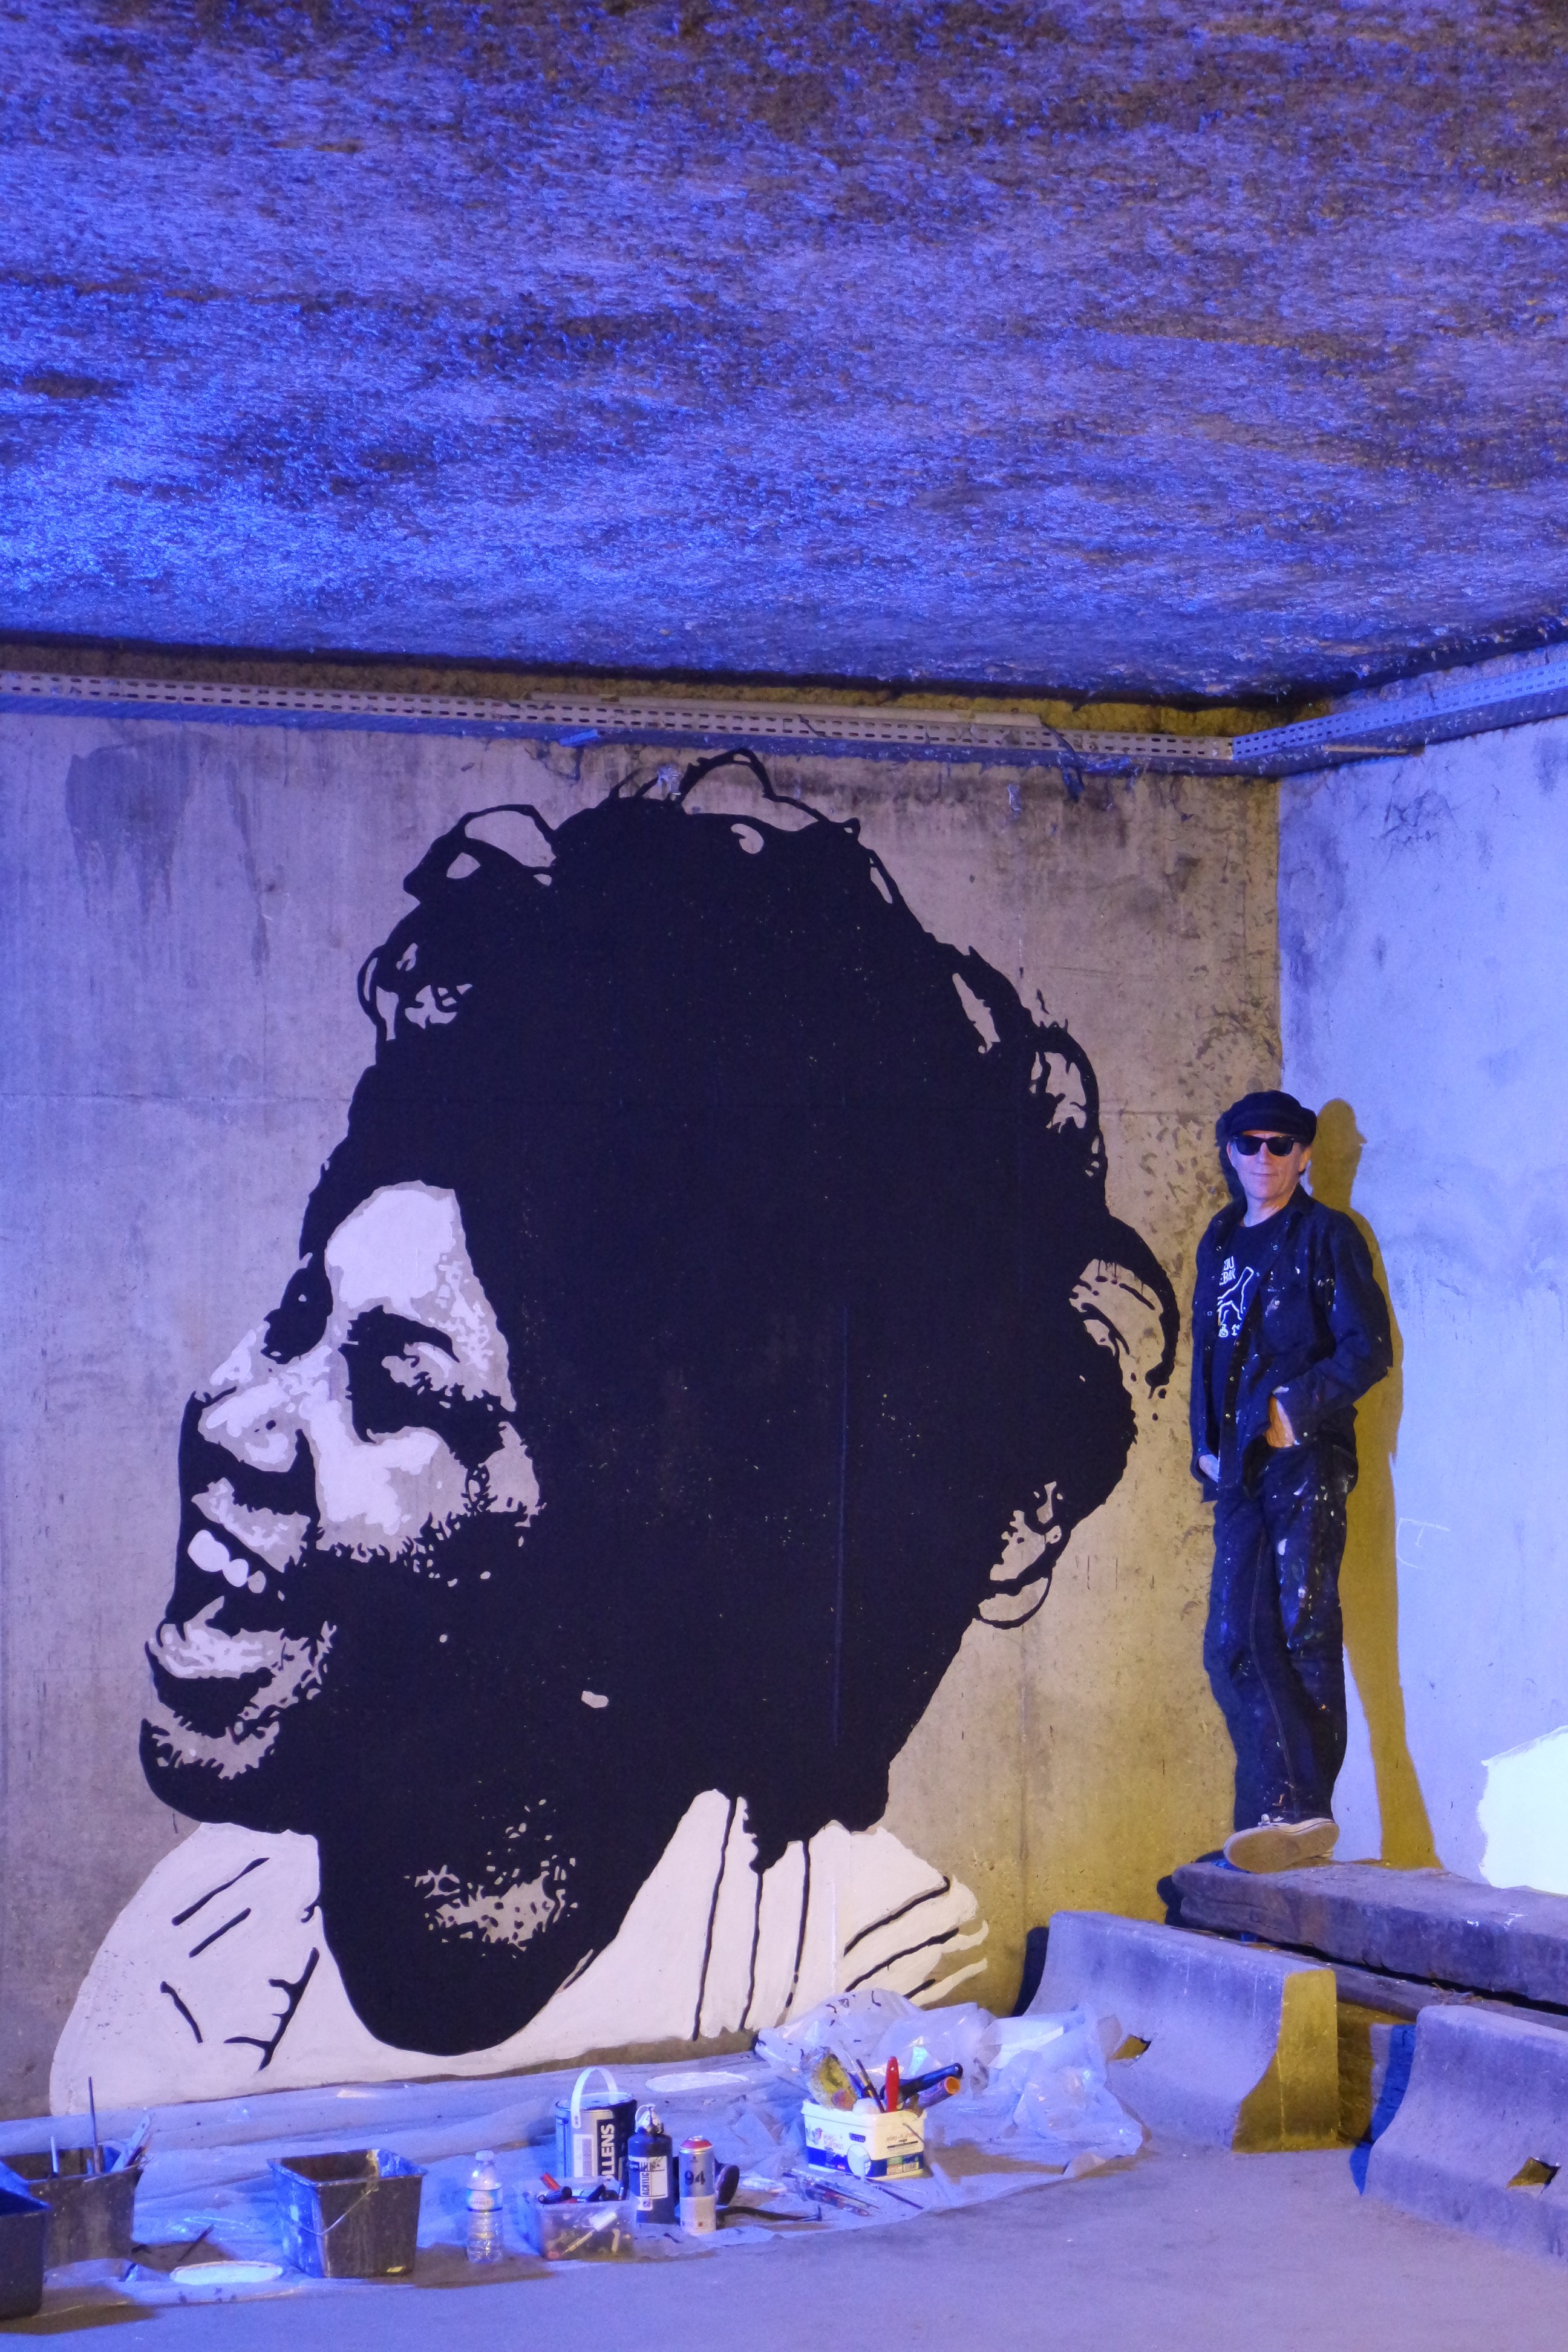 Nuit-Blanche-2014-carte-Blanche-Jef-Aérosol-portrait-graffiti-street-art-installation-Halle-Freyssinet-photo-by-United-States-of-Paris-blog